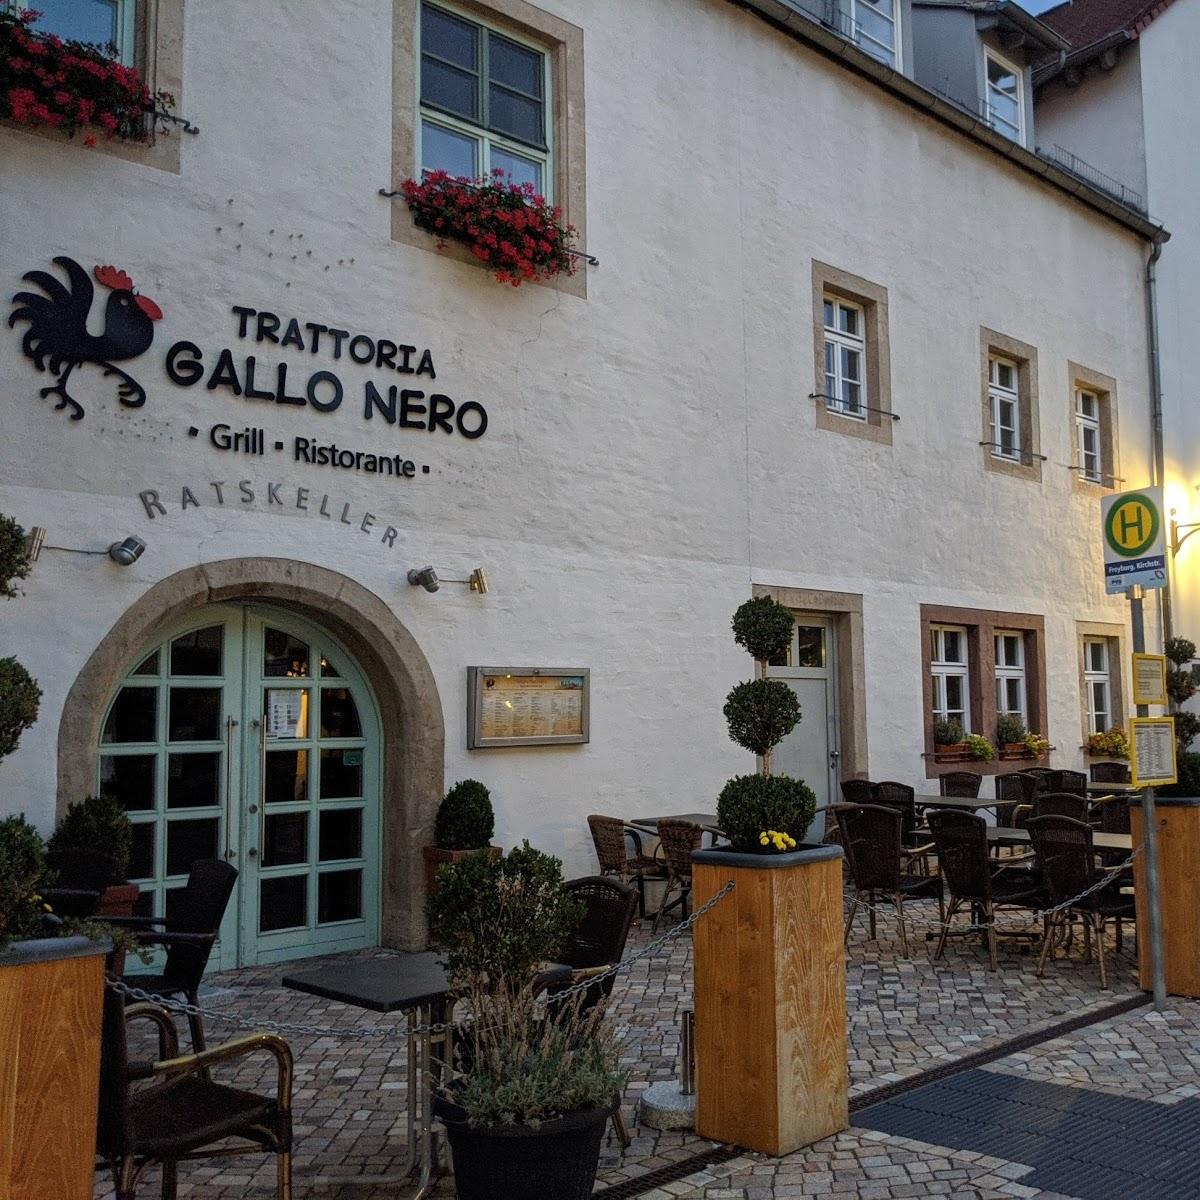 Restaurant "Trattoria Gallo Nero Beccofino GmbH" in Freyburg (Unstrut)